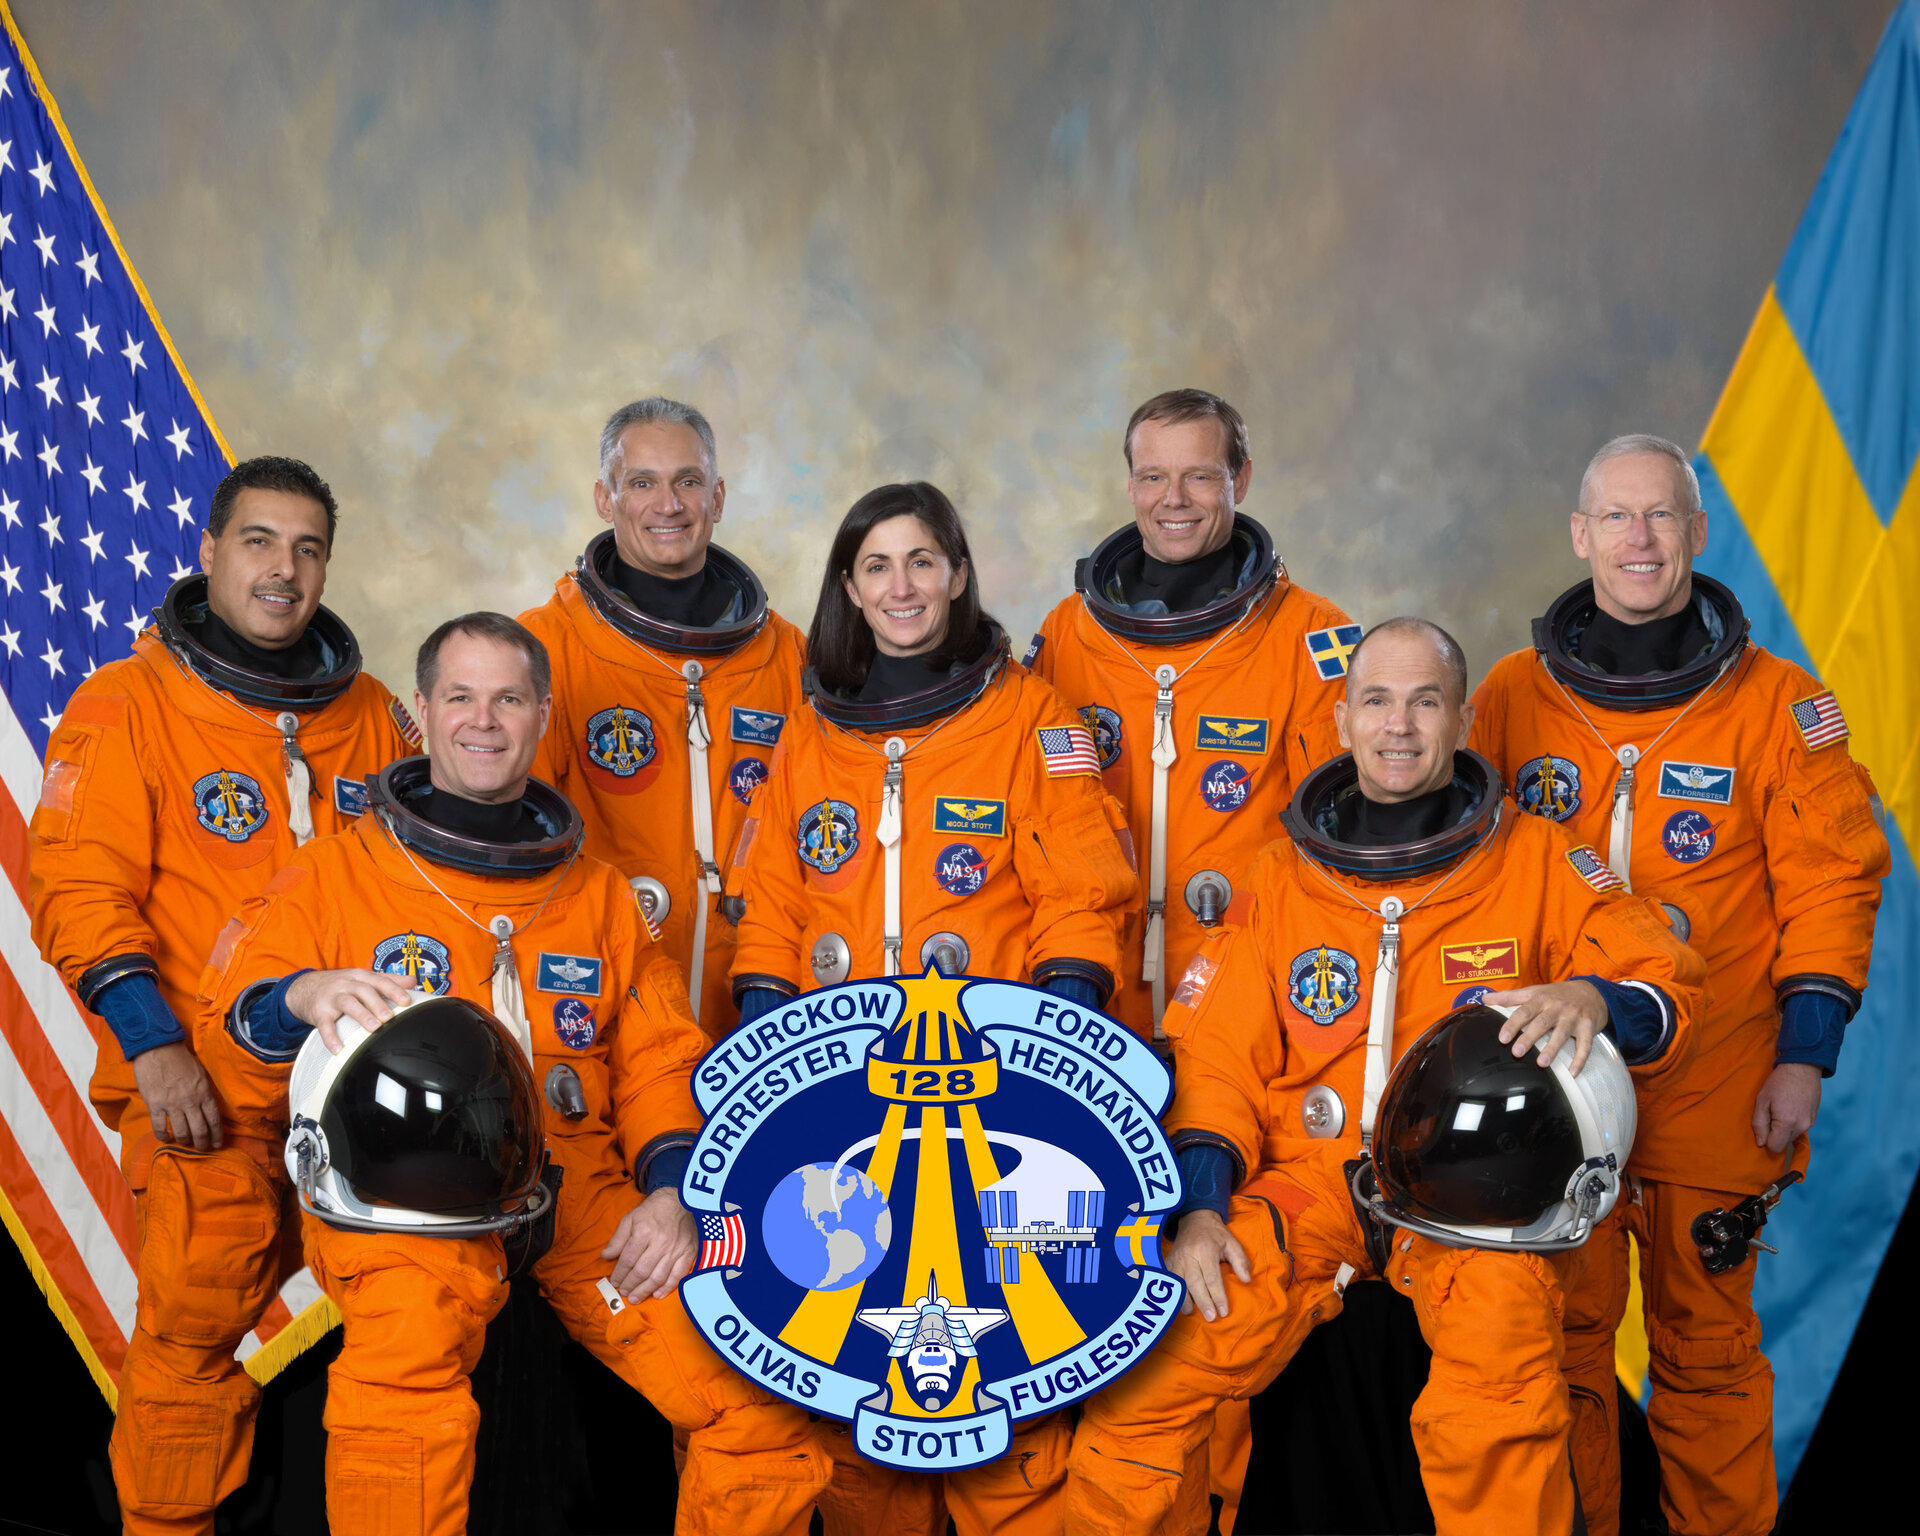 STS-128 crew portrait